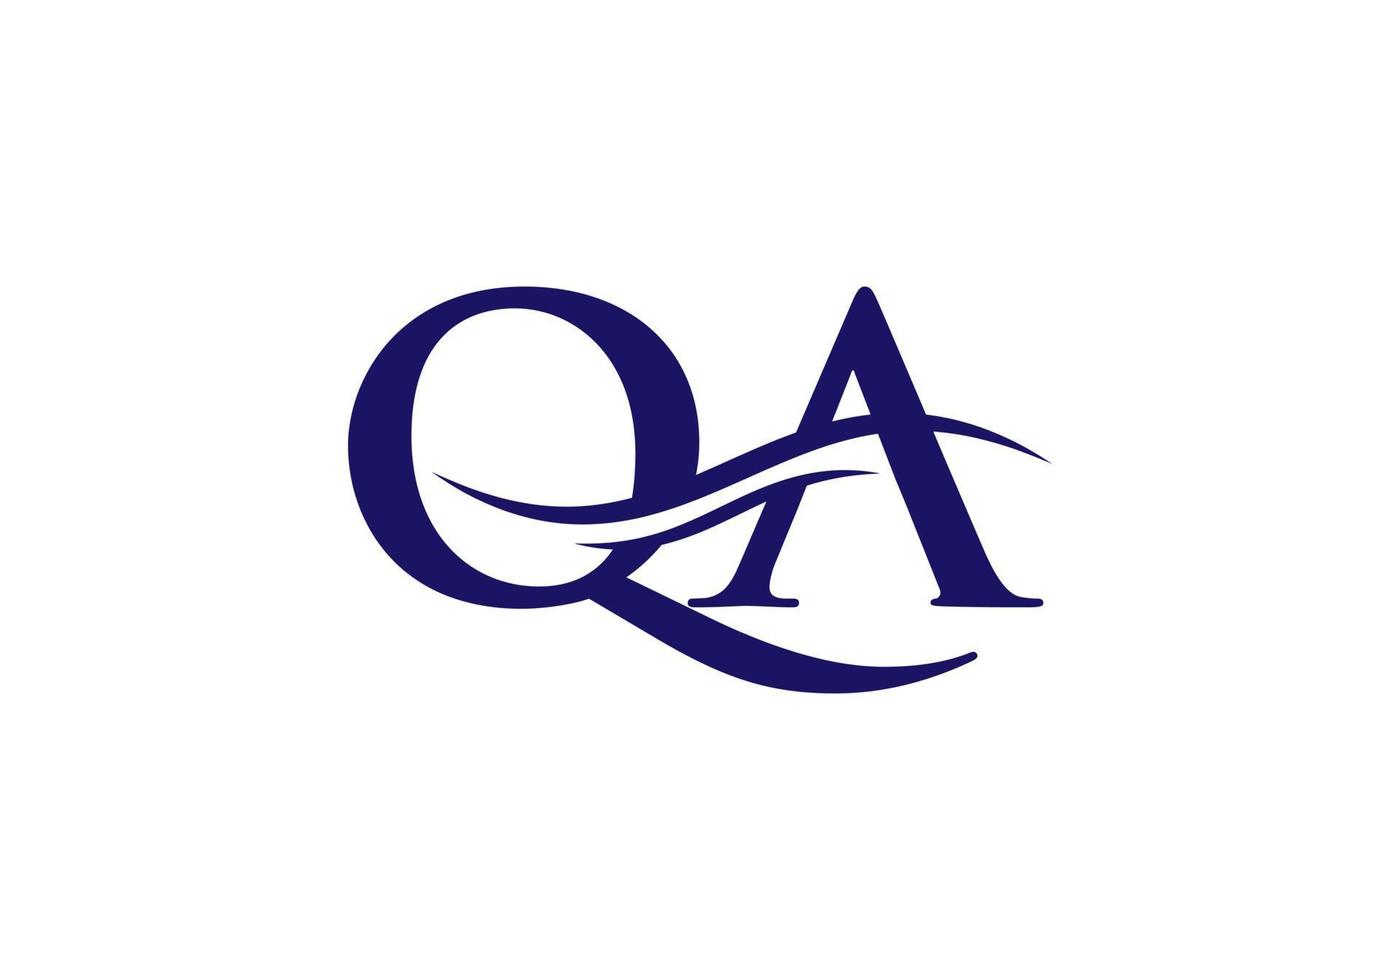 QA logo design. Initial QA letter logo vector. Swoosh letter QA logo design vector